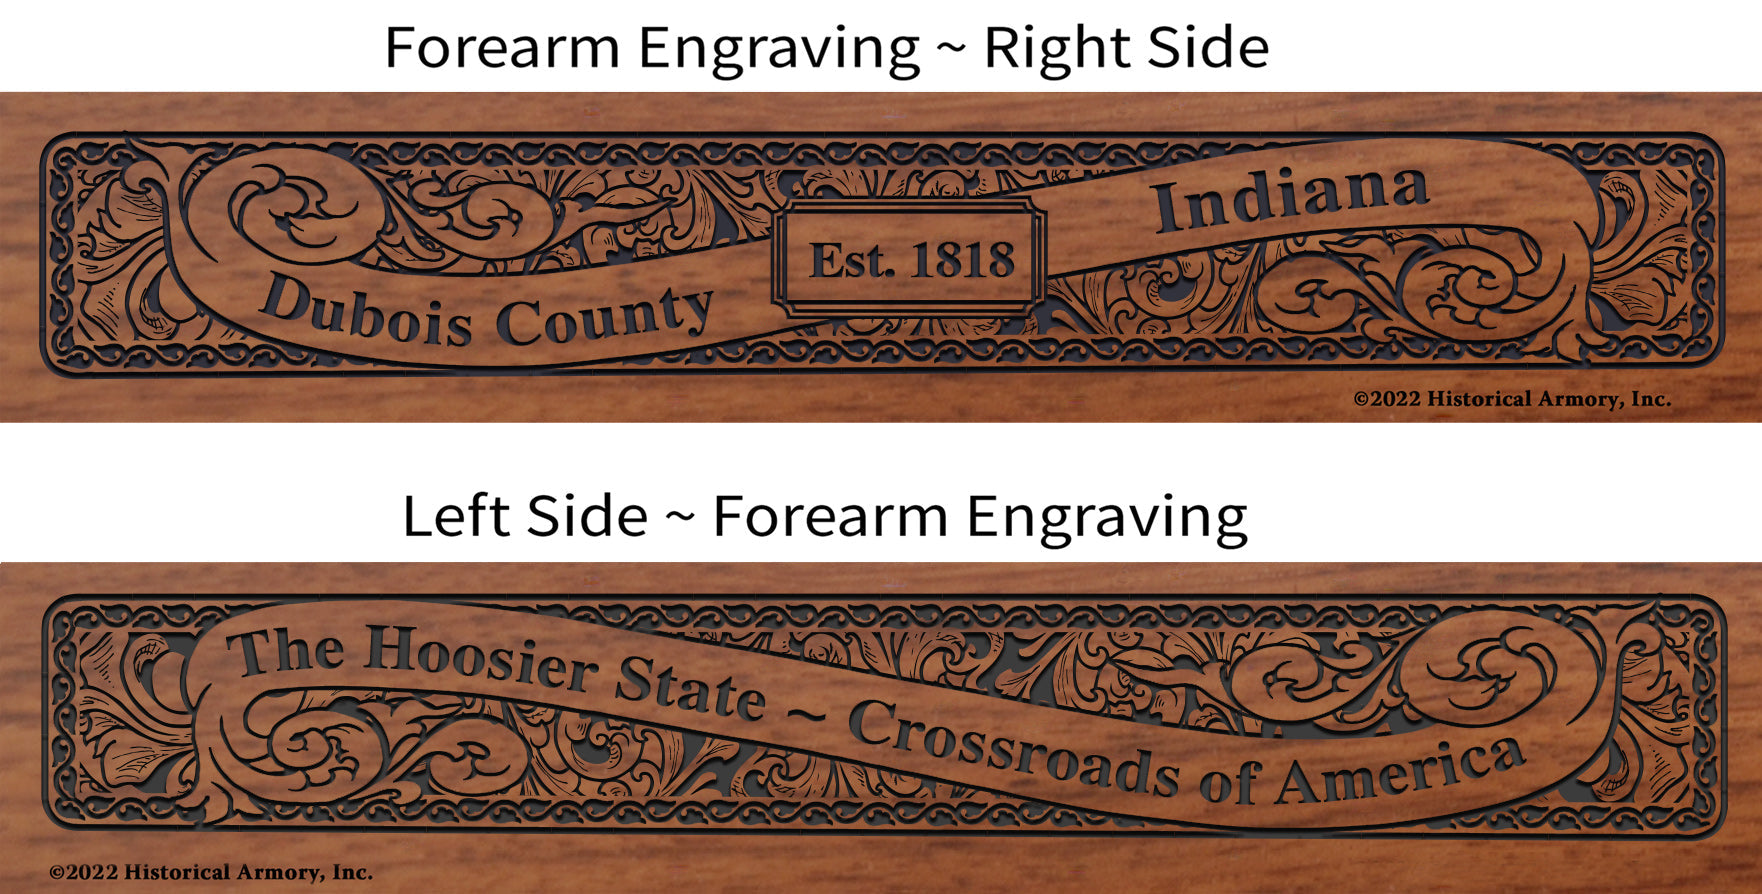 Dubois County Indiana Engraved Rifle Forearm